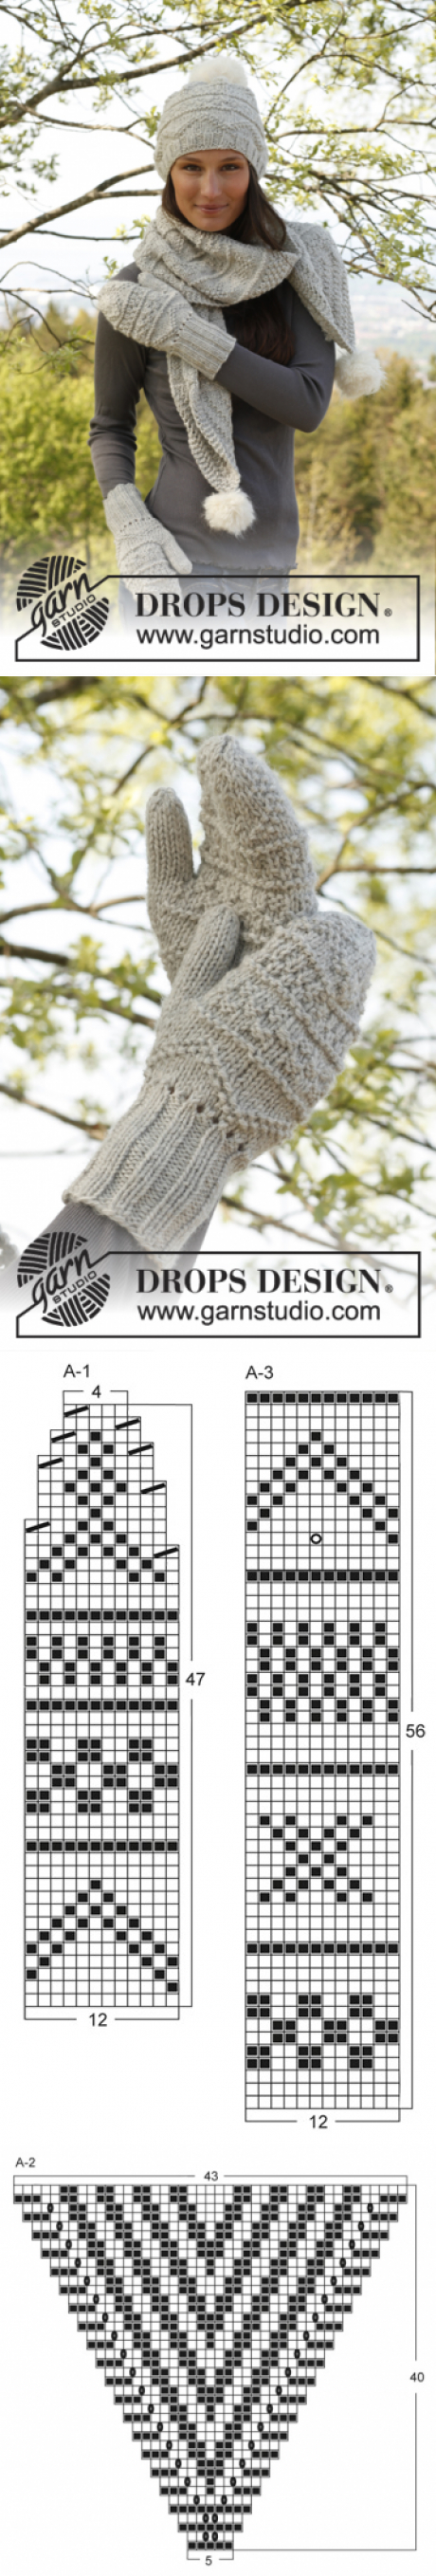 Drops Knitting Patterns Drops Design